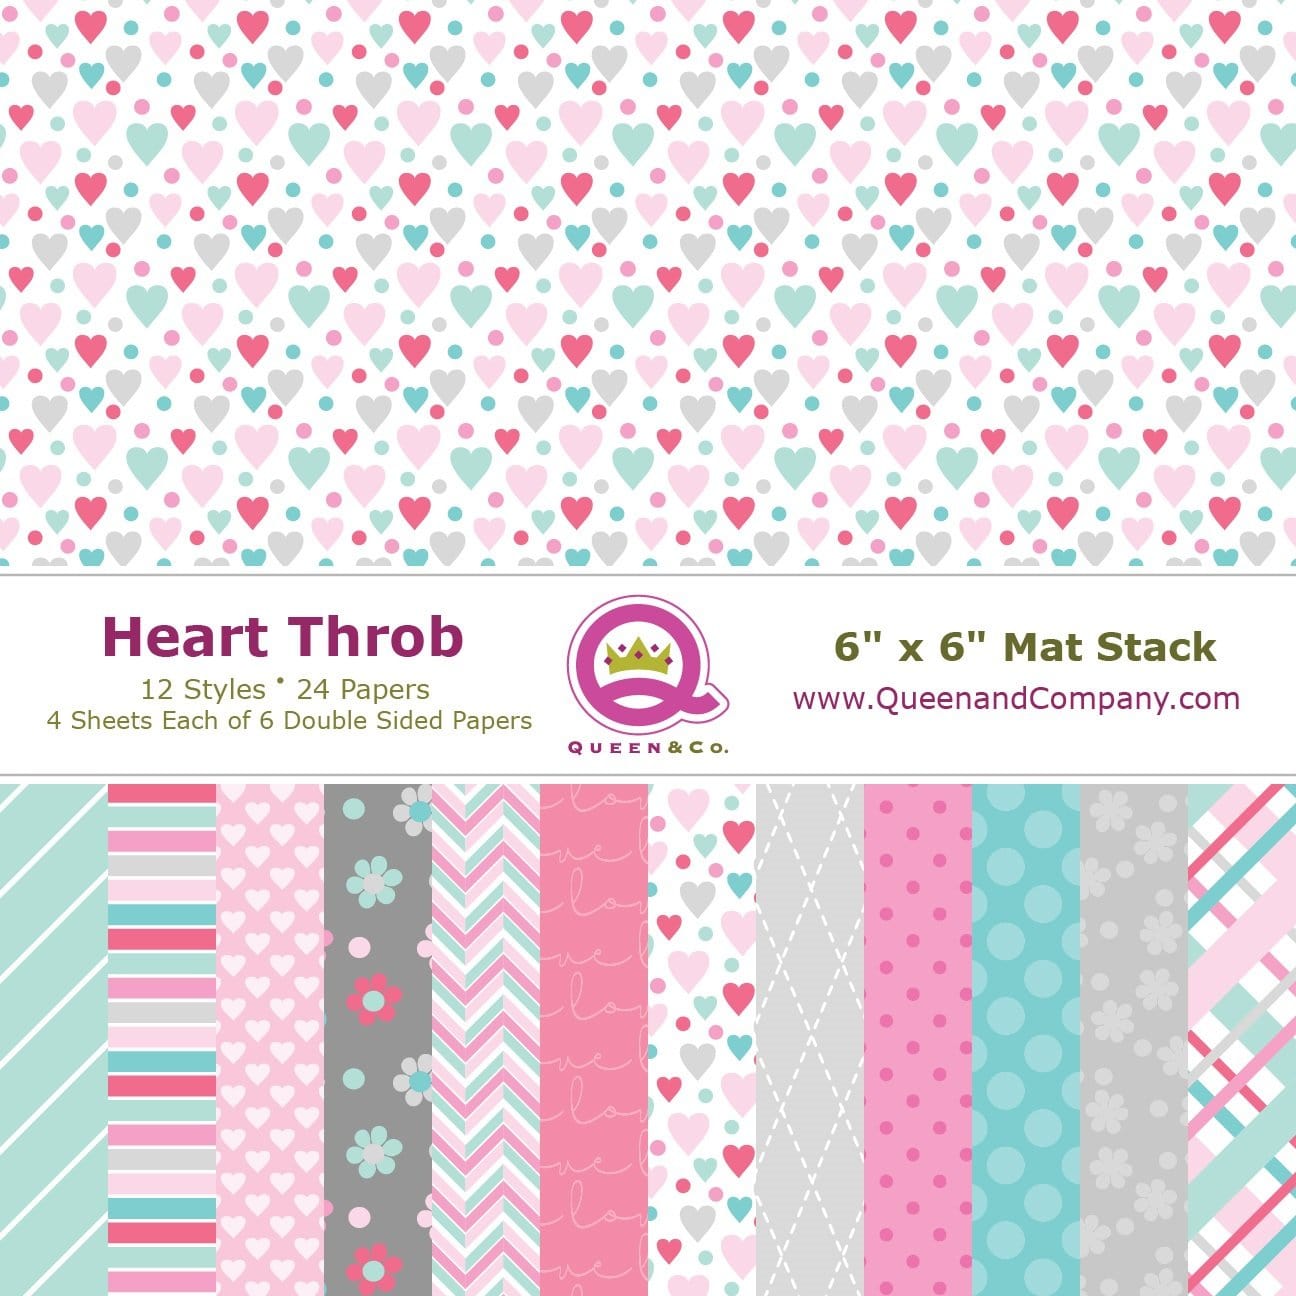 Heart Throb Paper Pad